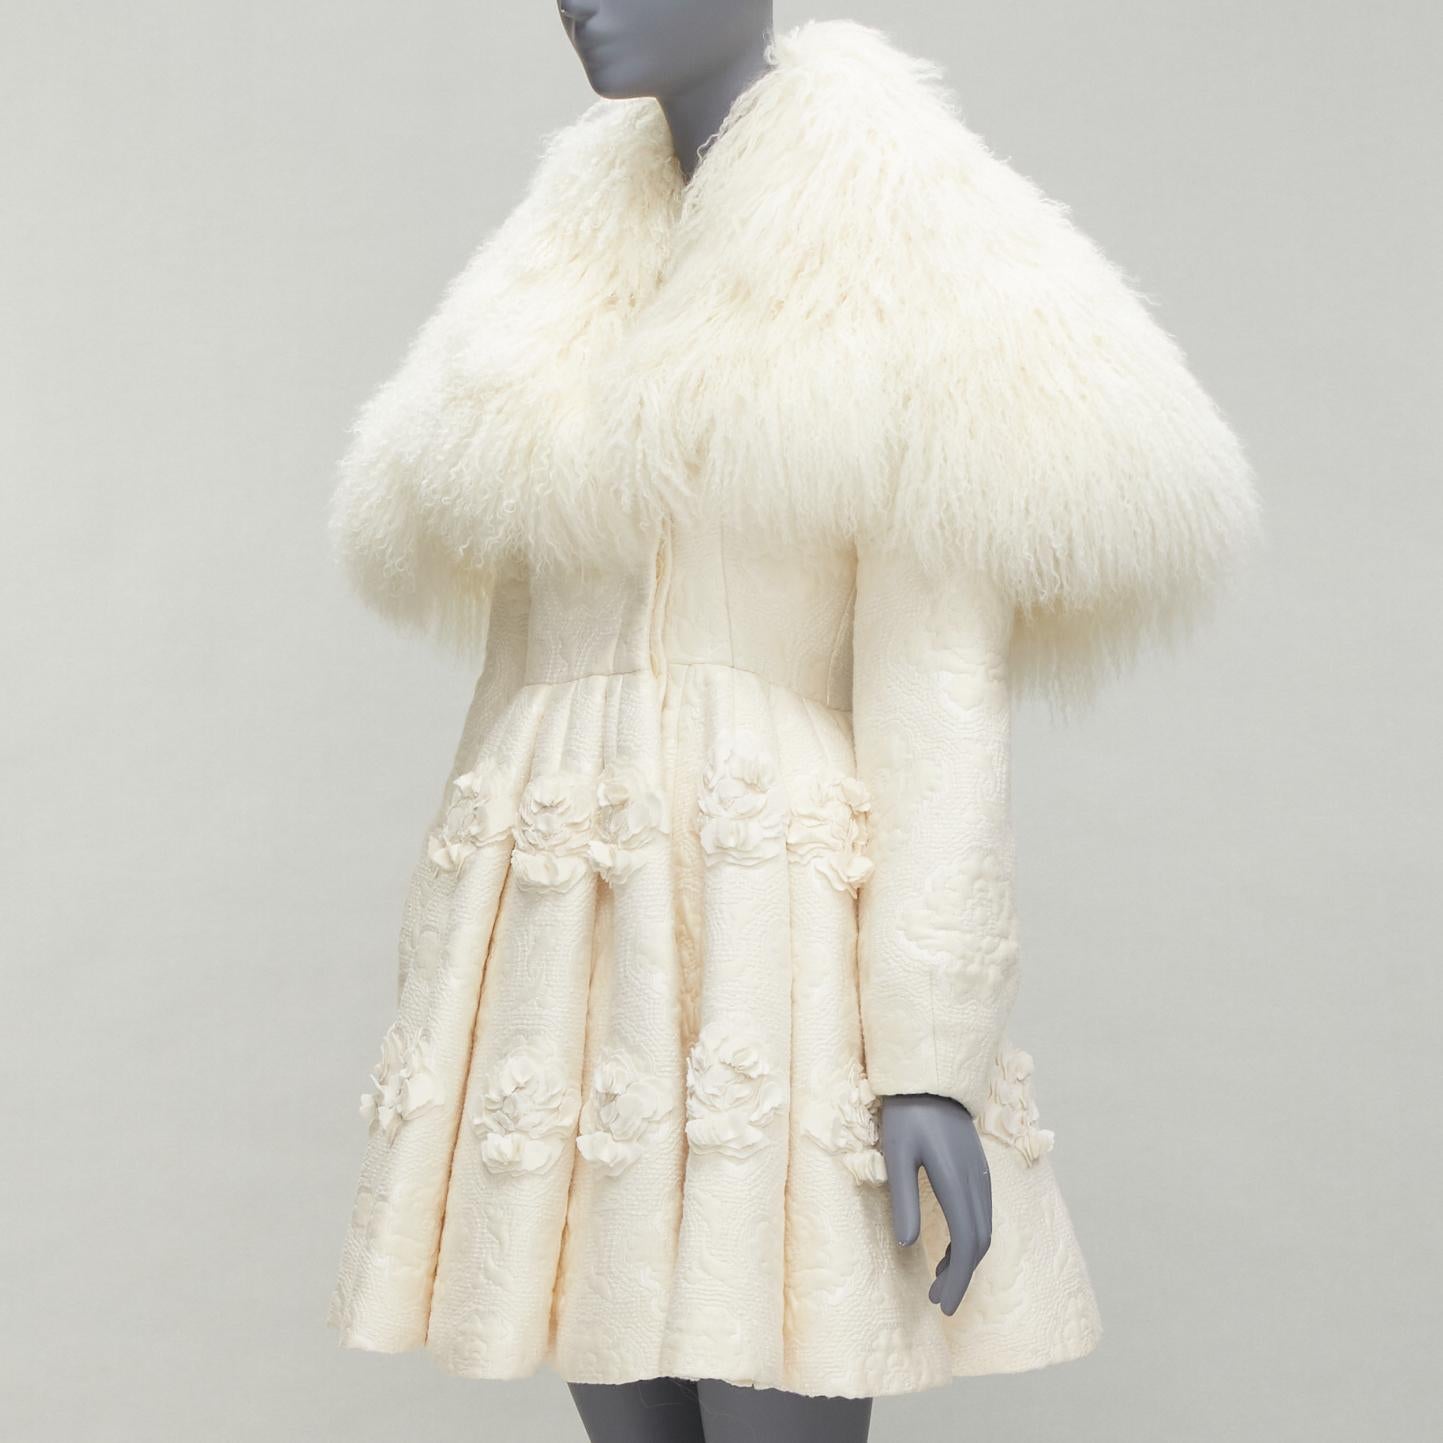 rare ALEXANDER MCQUEEN Sarah Burton 2012 Runway shearling coat dress IT38 XS For Sale 1